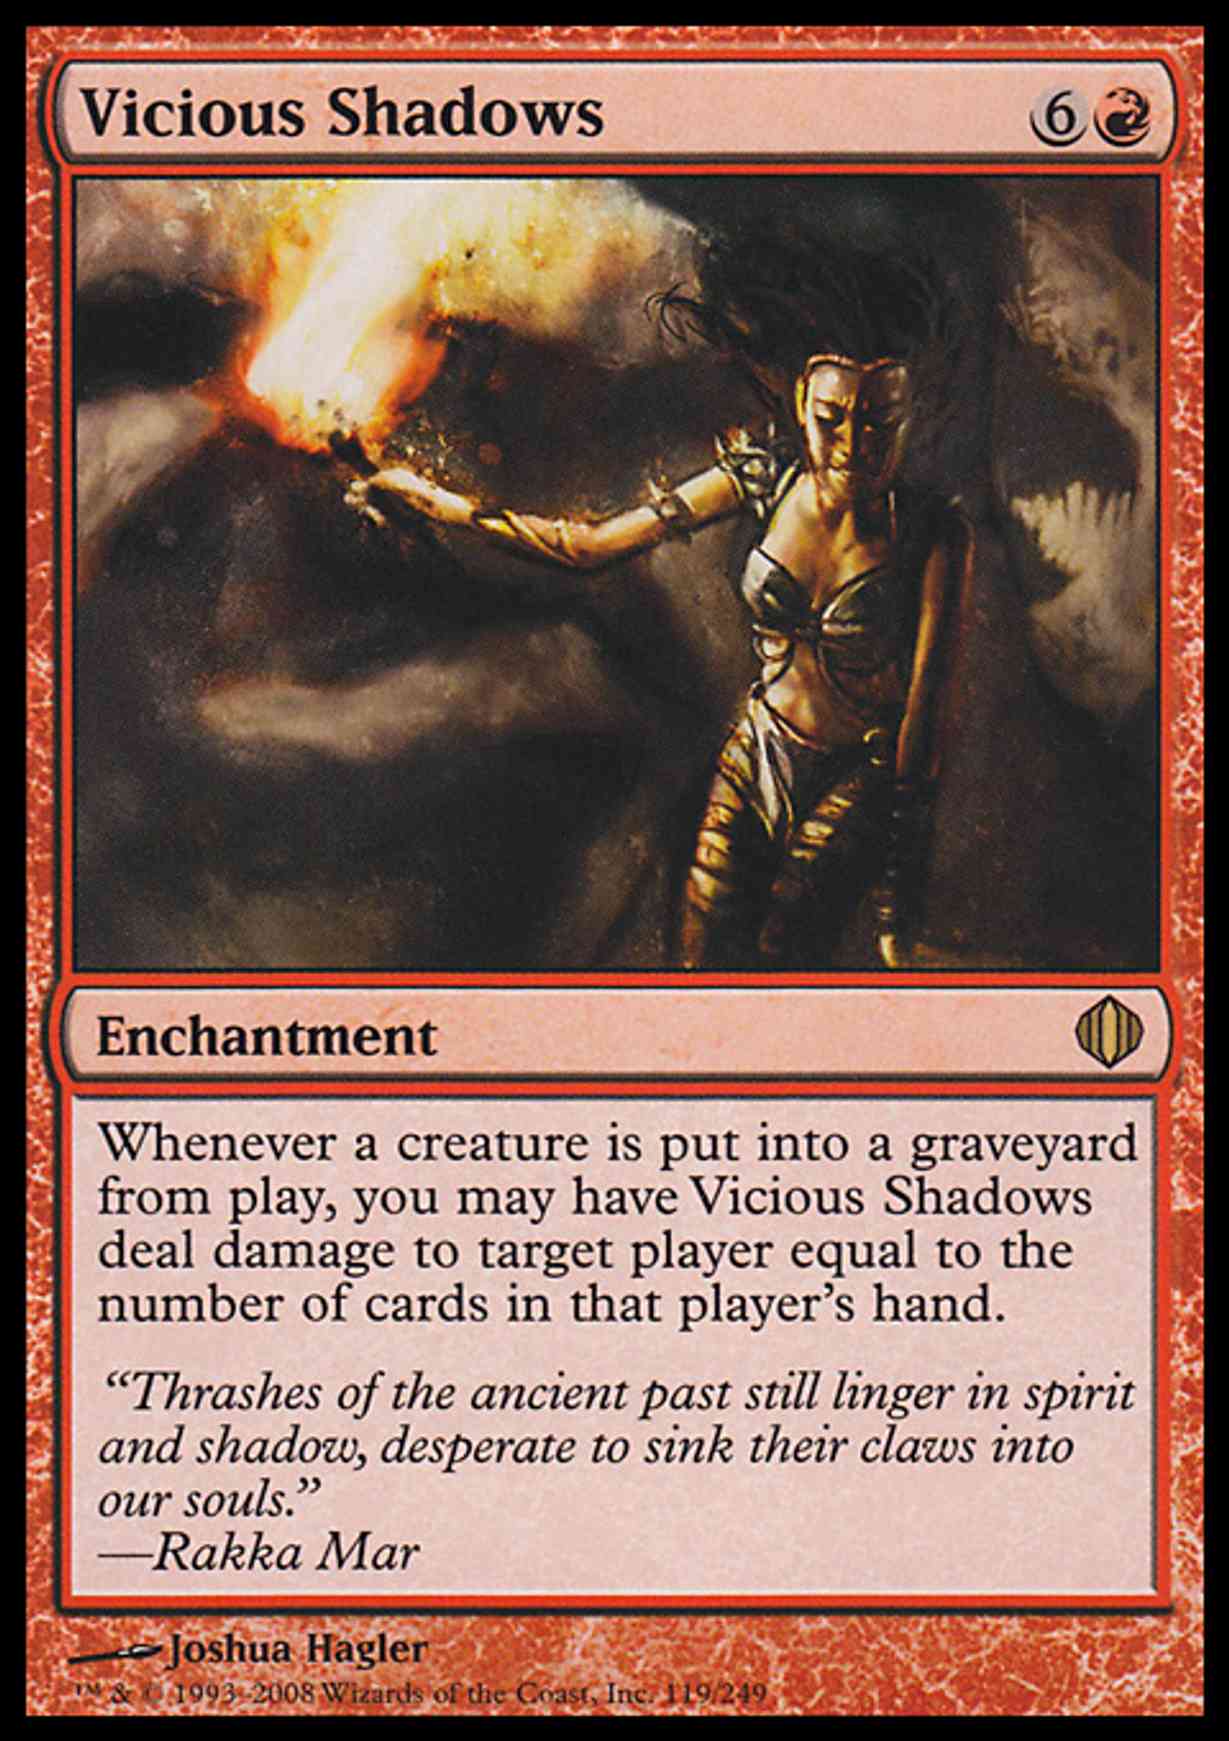 Vicious Shadows magic card front